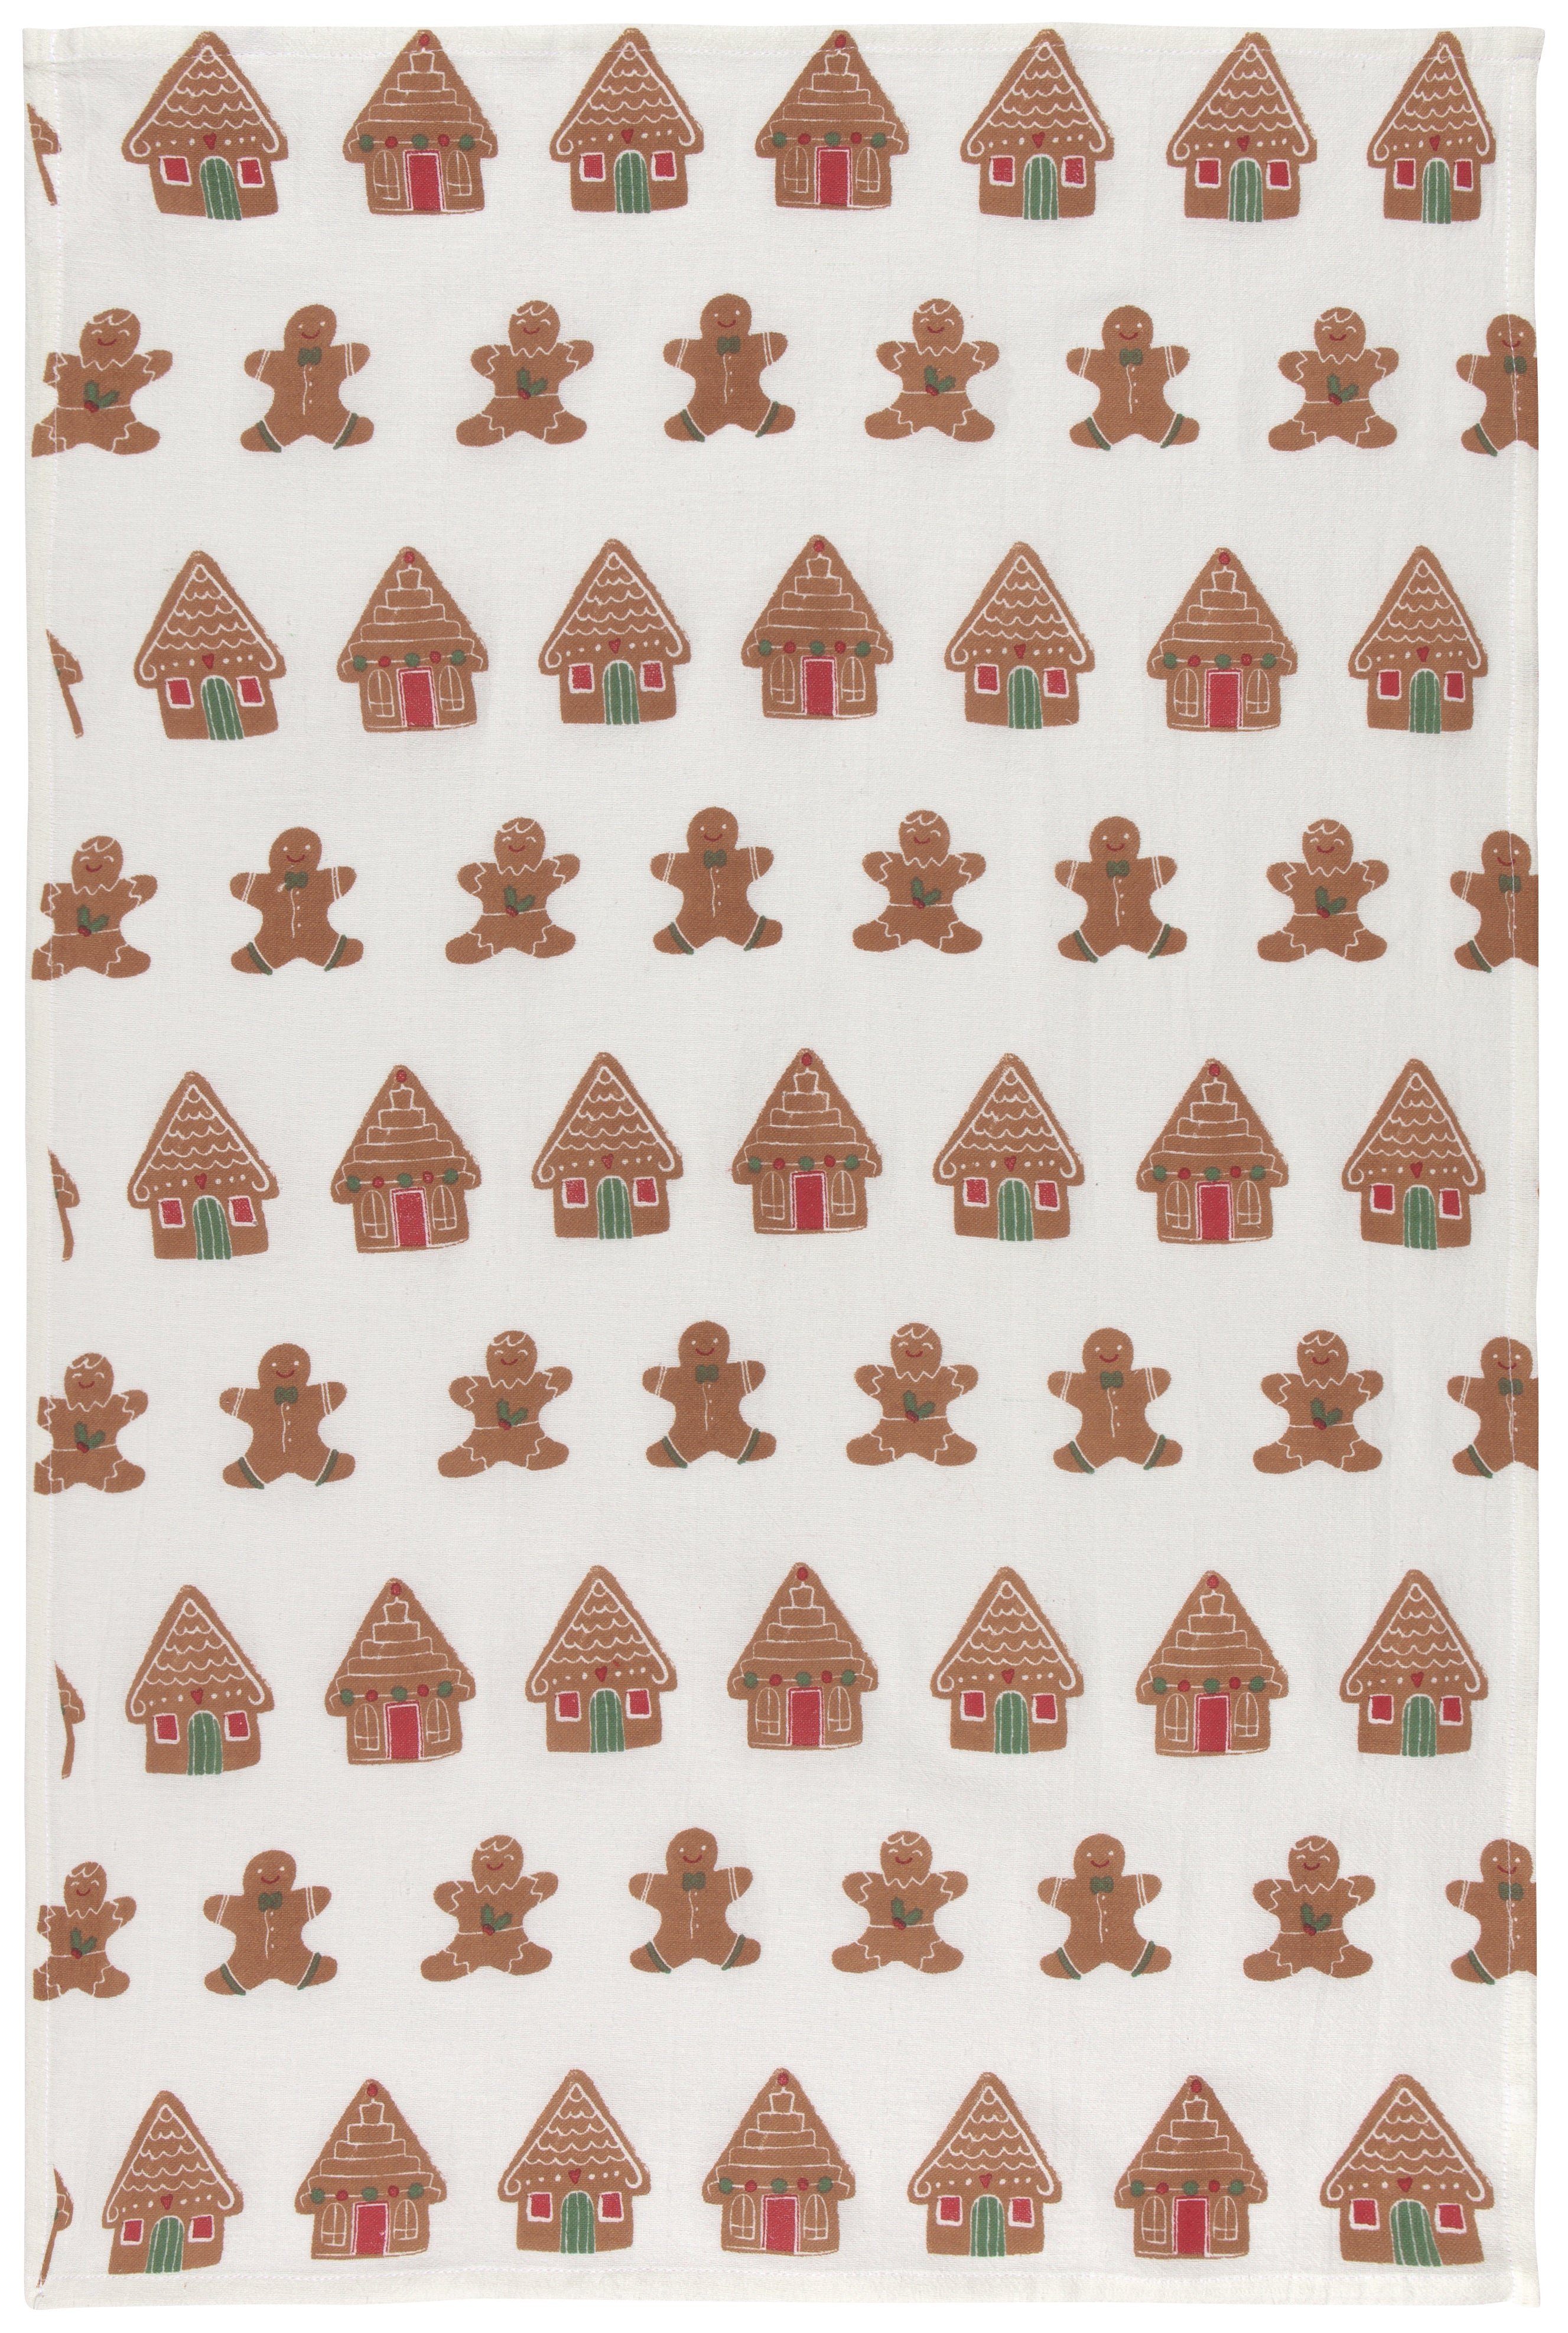 Christmas Cookies Flour sack Kitchen Towel Set of 3 | Now Designs